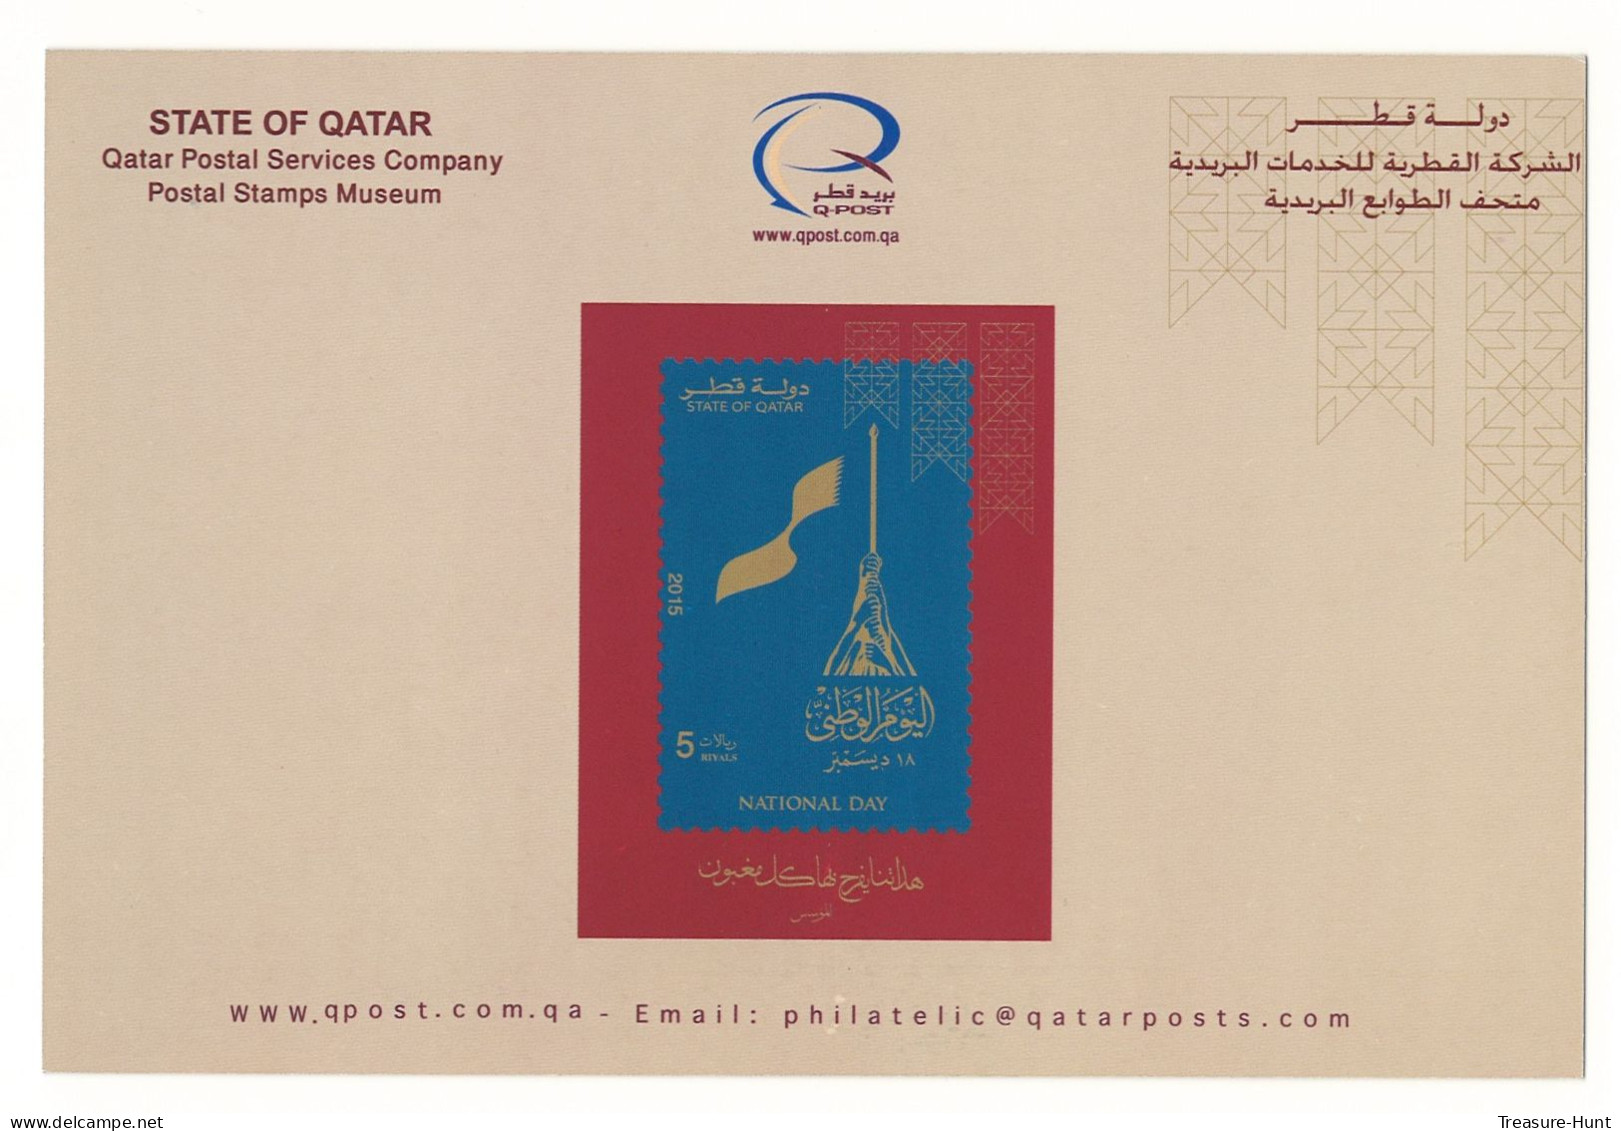 QATAR NEW STAMPS ISSUE BULLETIN / BROCHURE / POSTAL NOTICE - 2015 NATIONAL DAY CELEBRATION, FLAG - Qatar